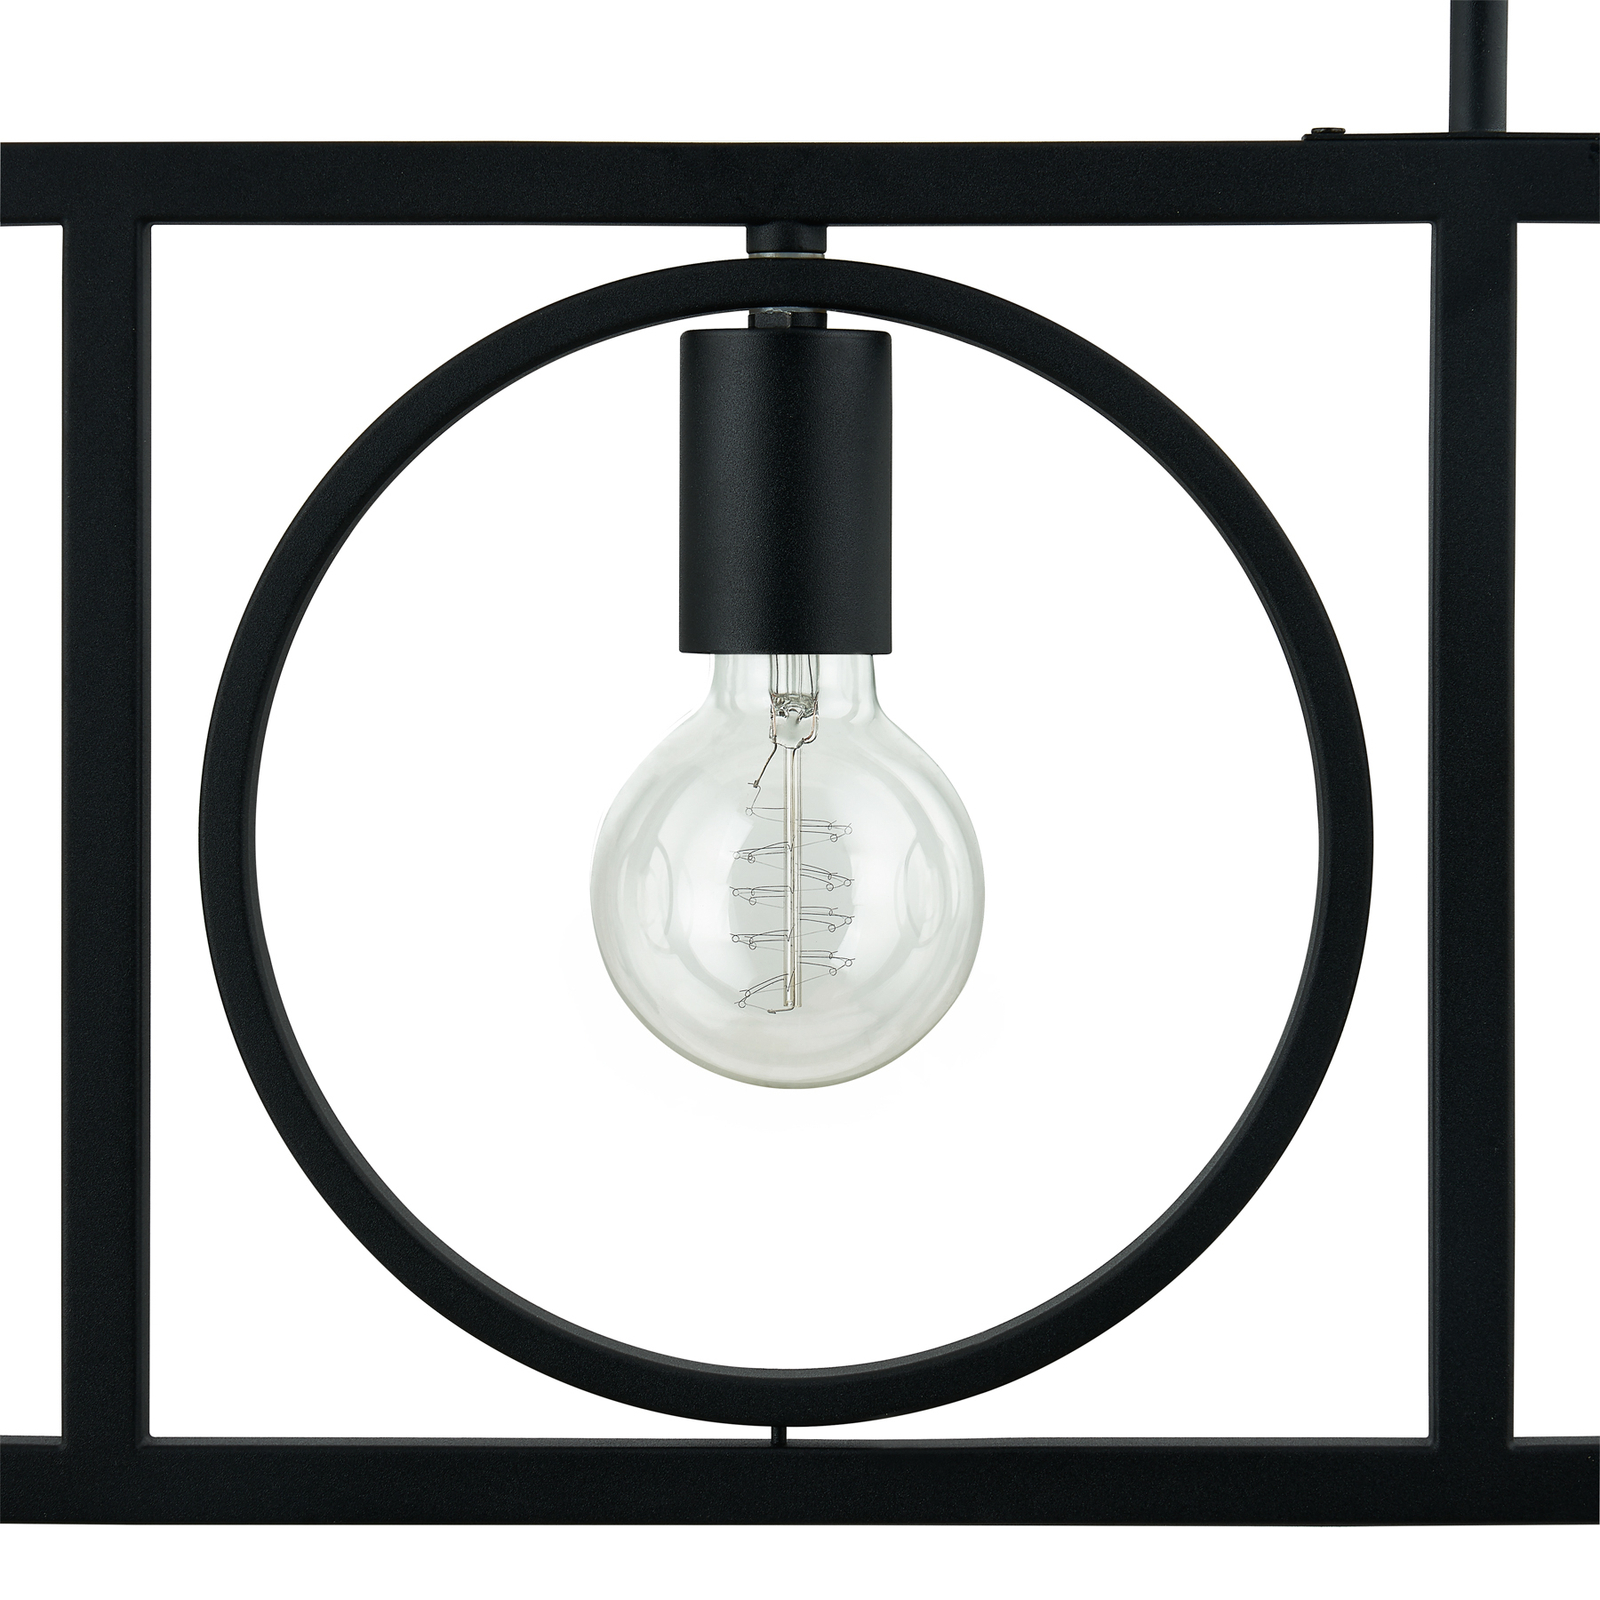 Lindby hanglamp Mateja, zwart, metaal, 112 cm, 4-lamps.